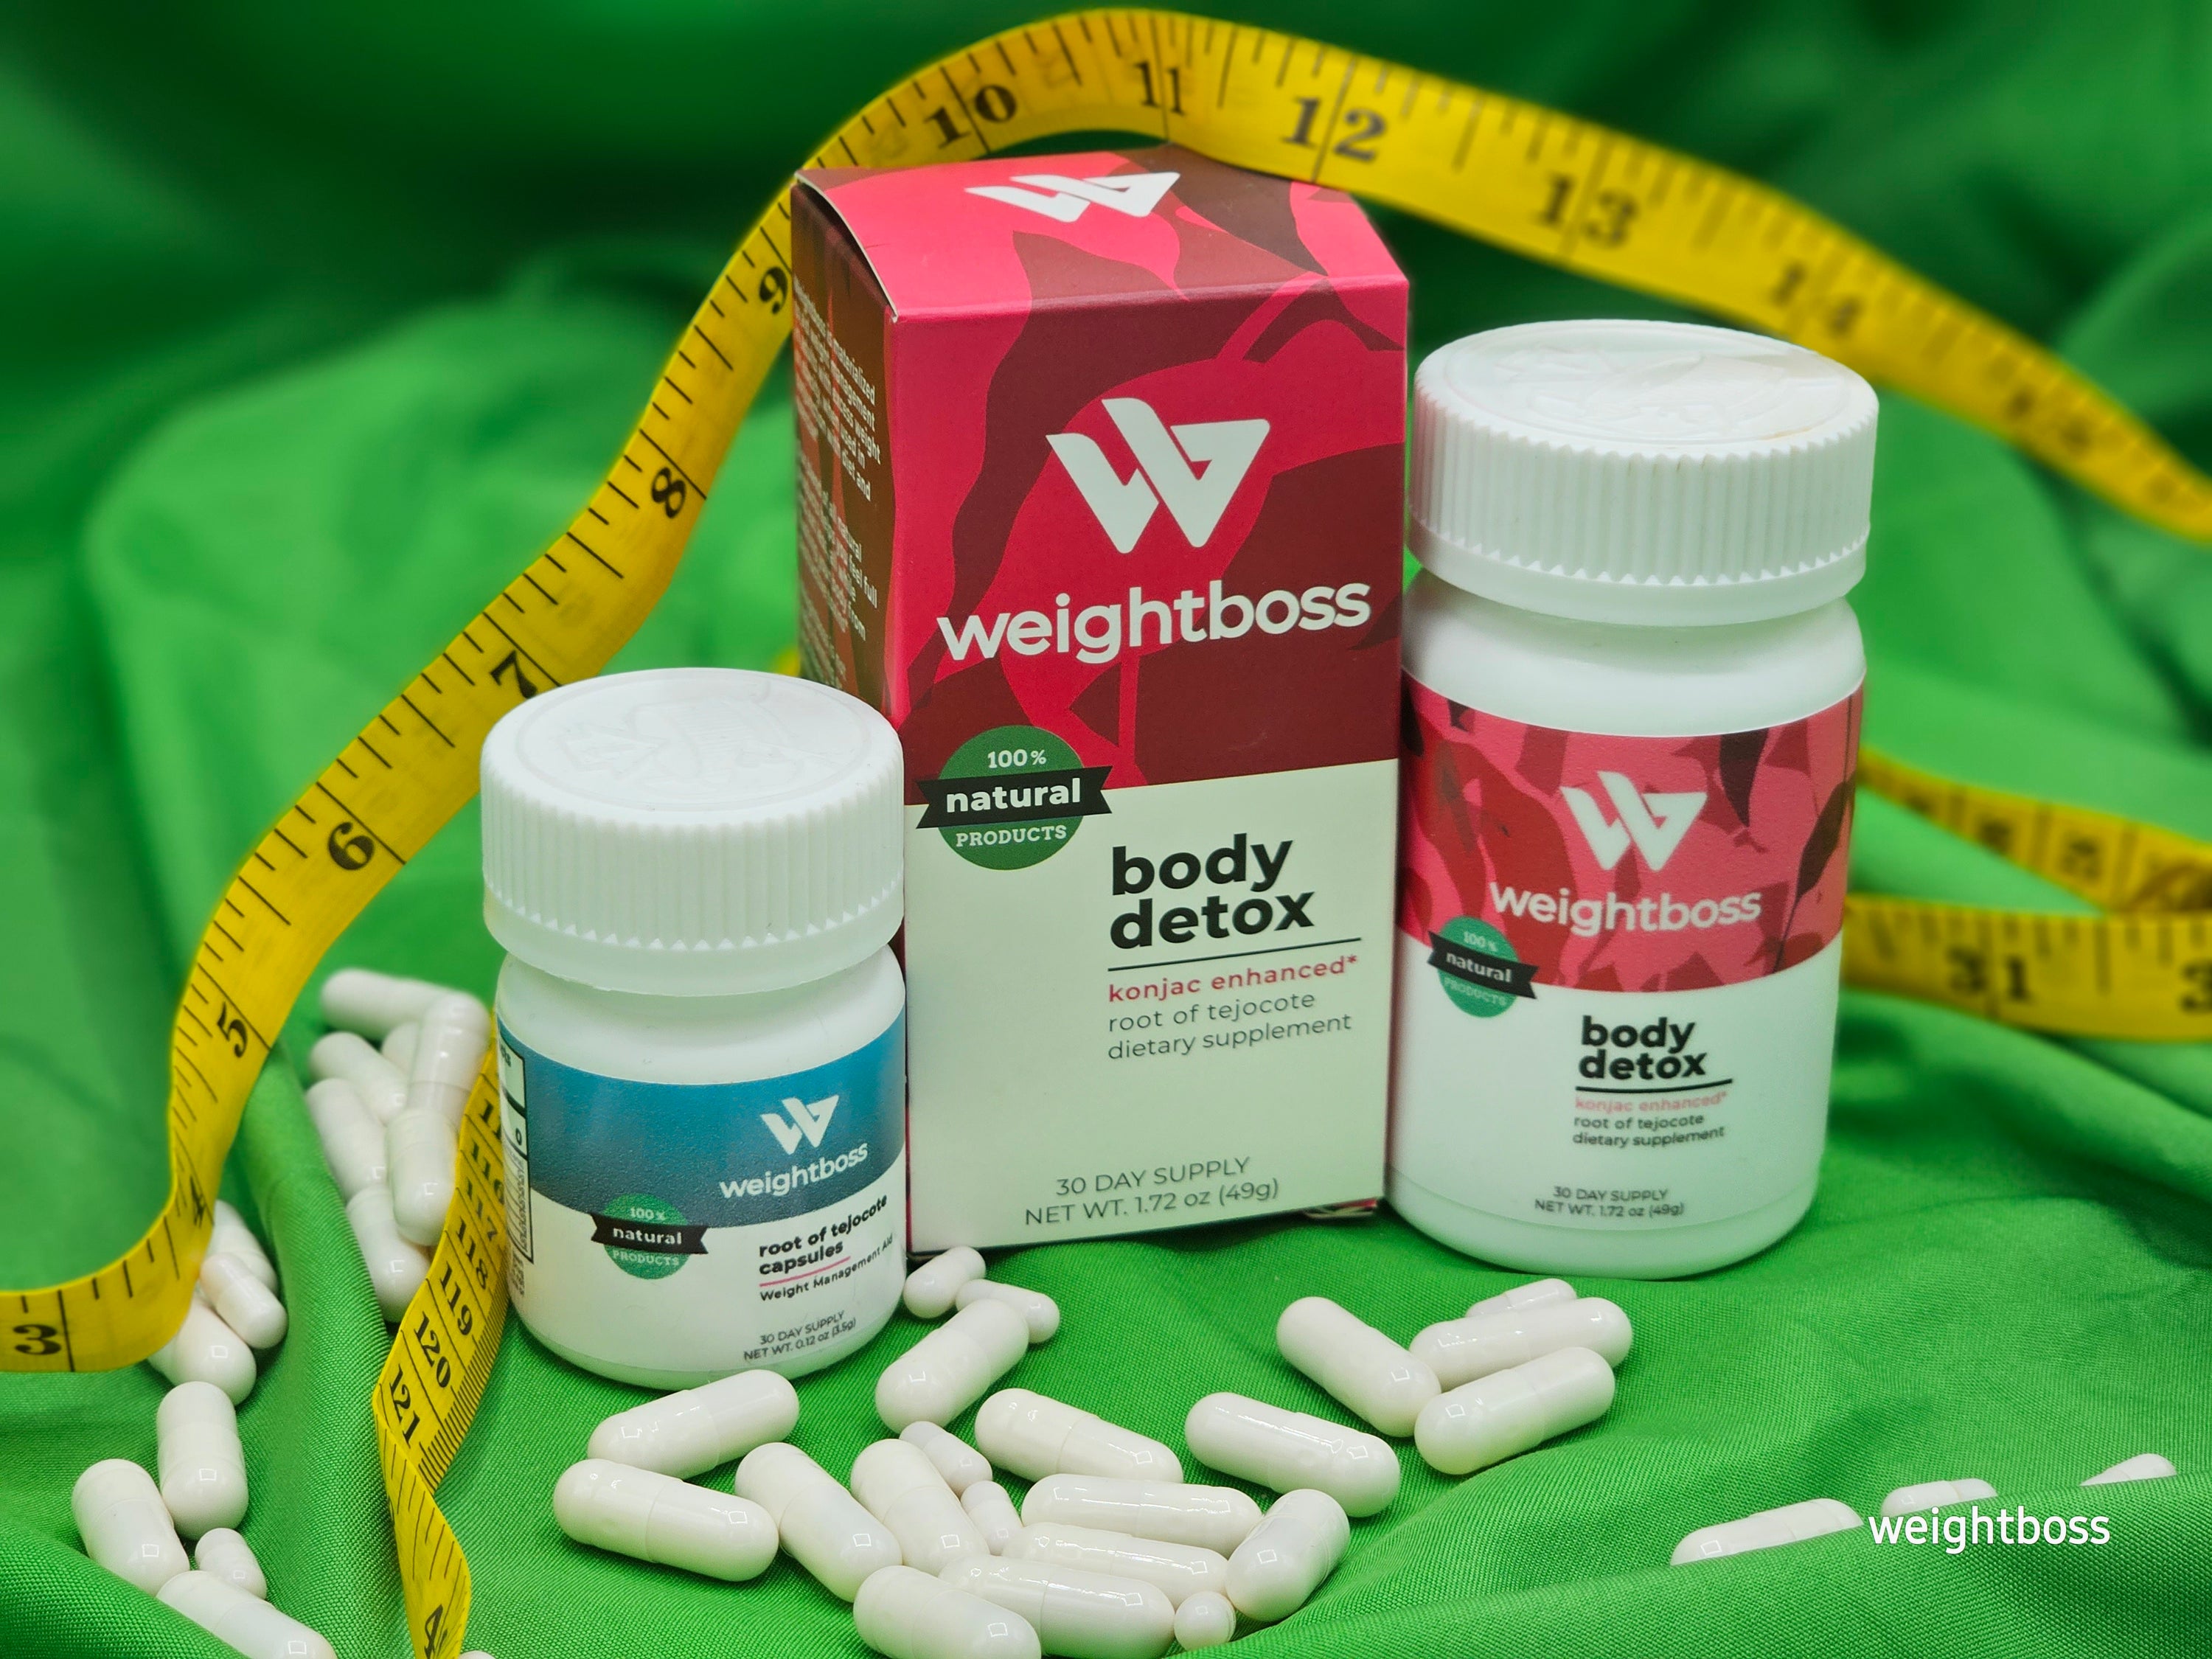 Weightboss: More Than Just Detox, A Family's Wellness Journey